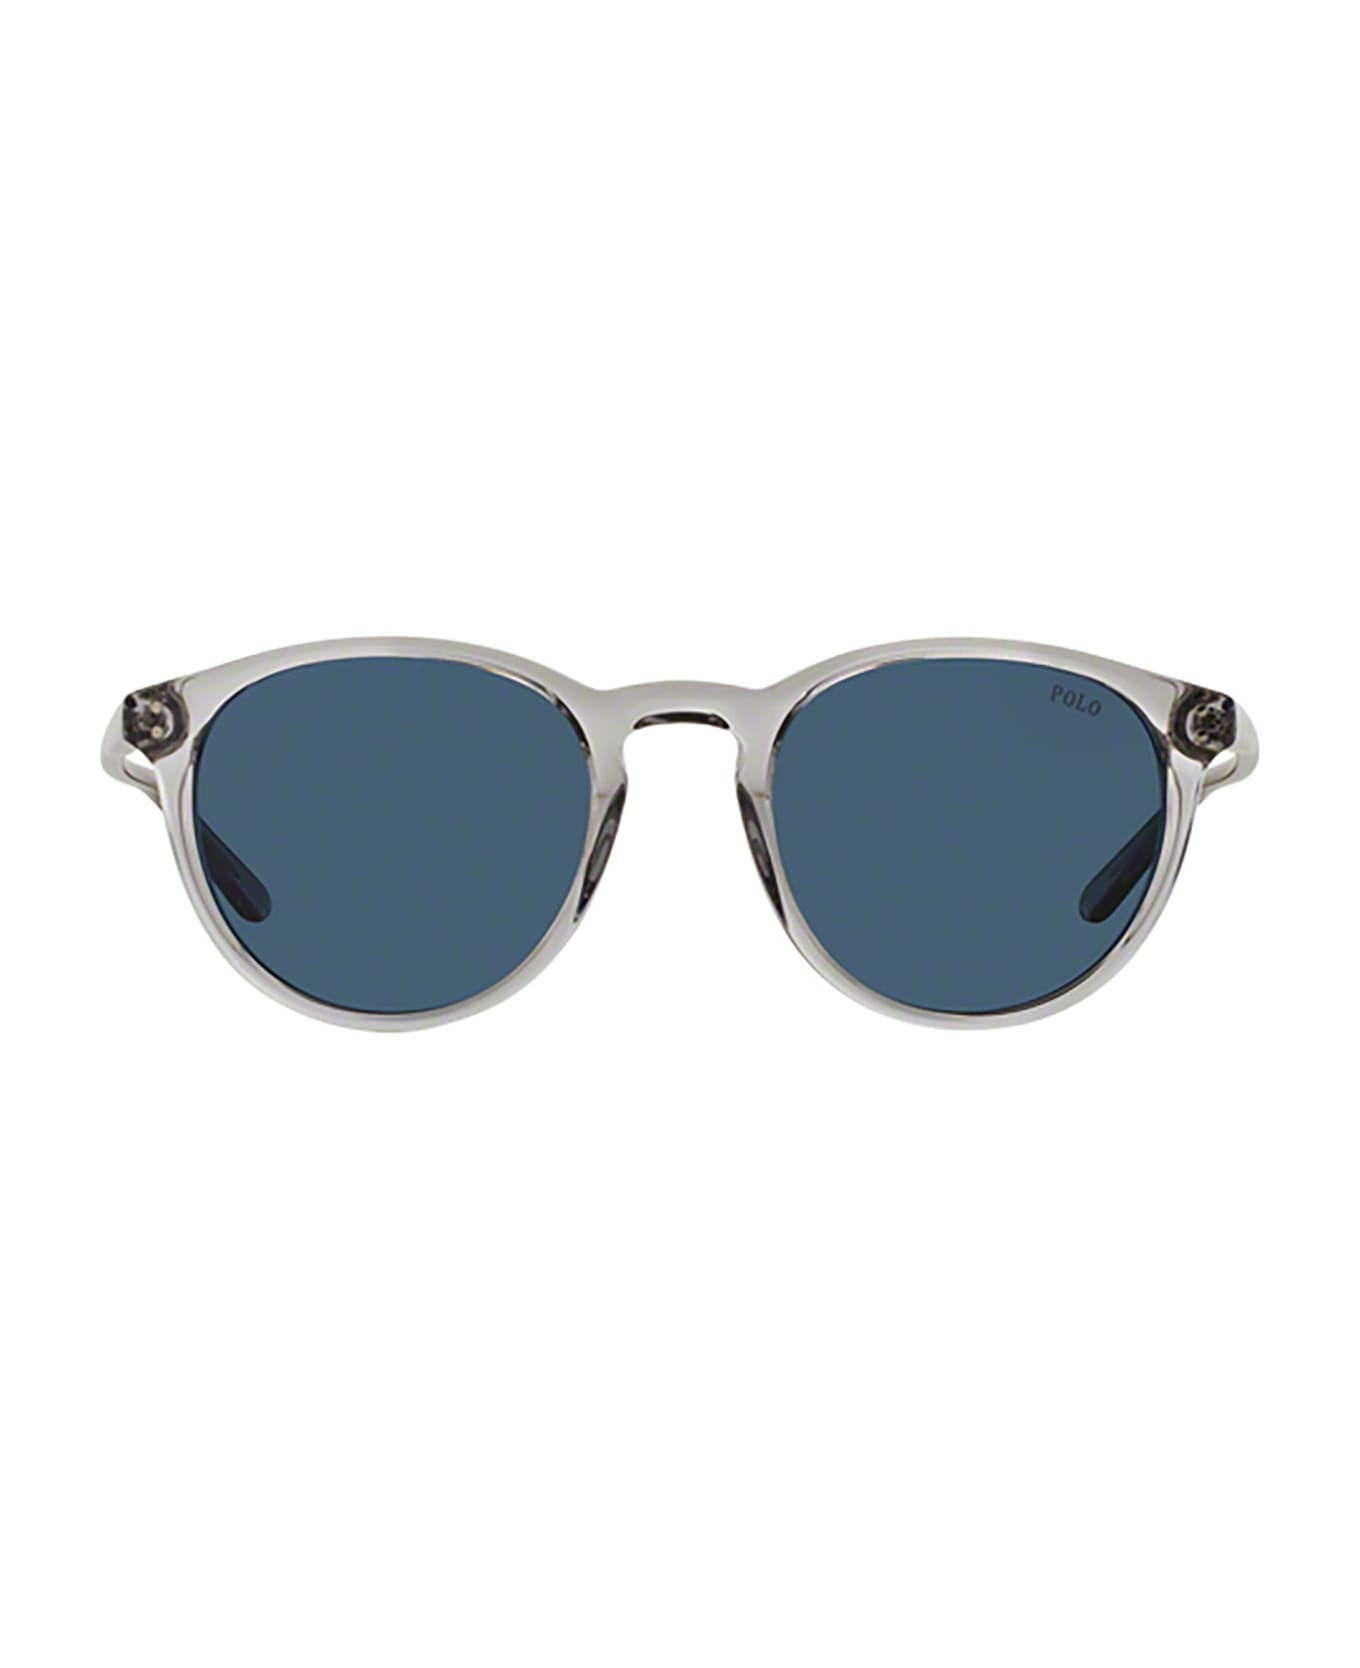 Polo Ralph Lauren Ph4110 Shiny Semi-transparent Grey Sunglasses - SHINY SEMI-TRANSPARENT GREY